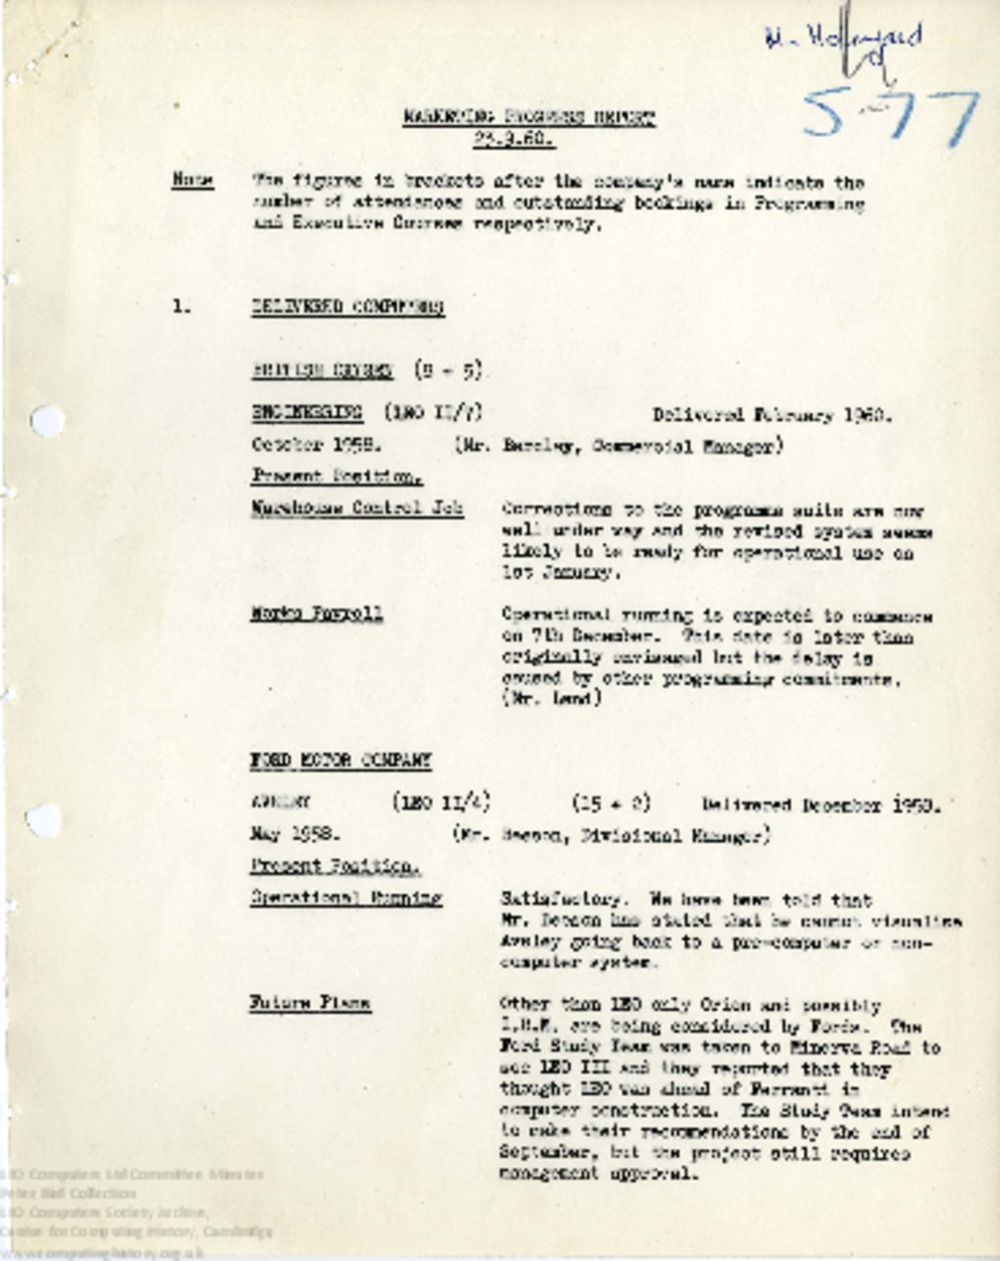 Article: 64491 Marketing Progress Report, 23rd Sep 1960